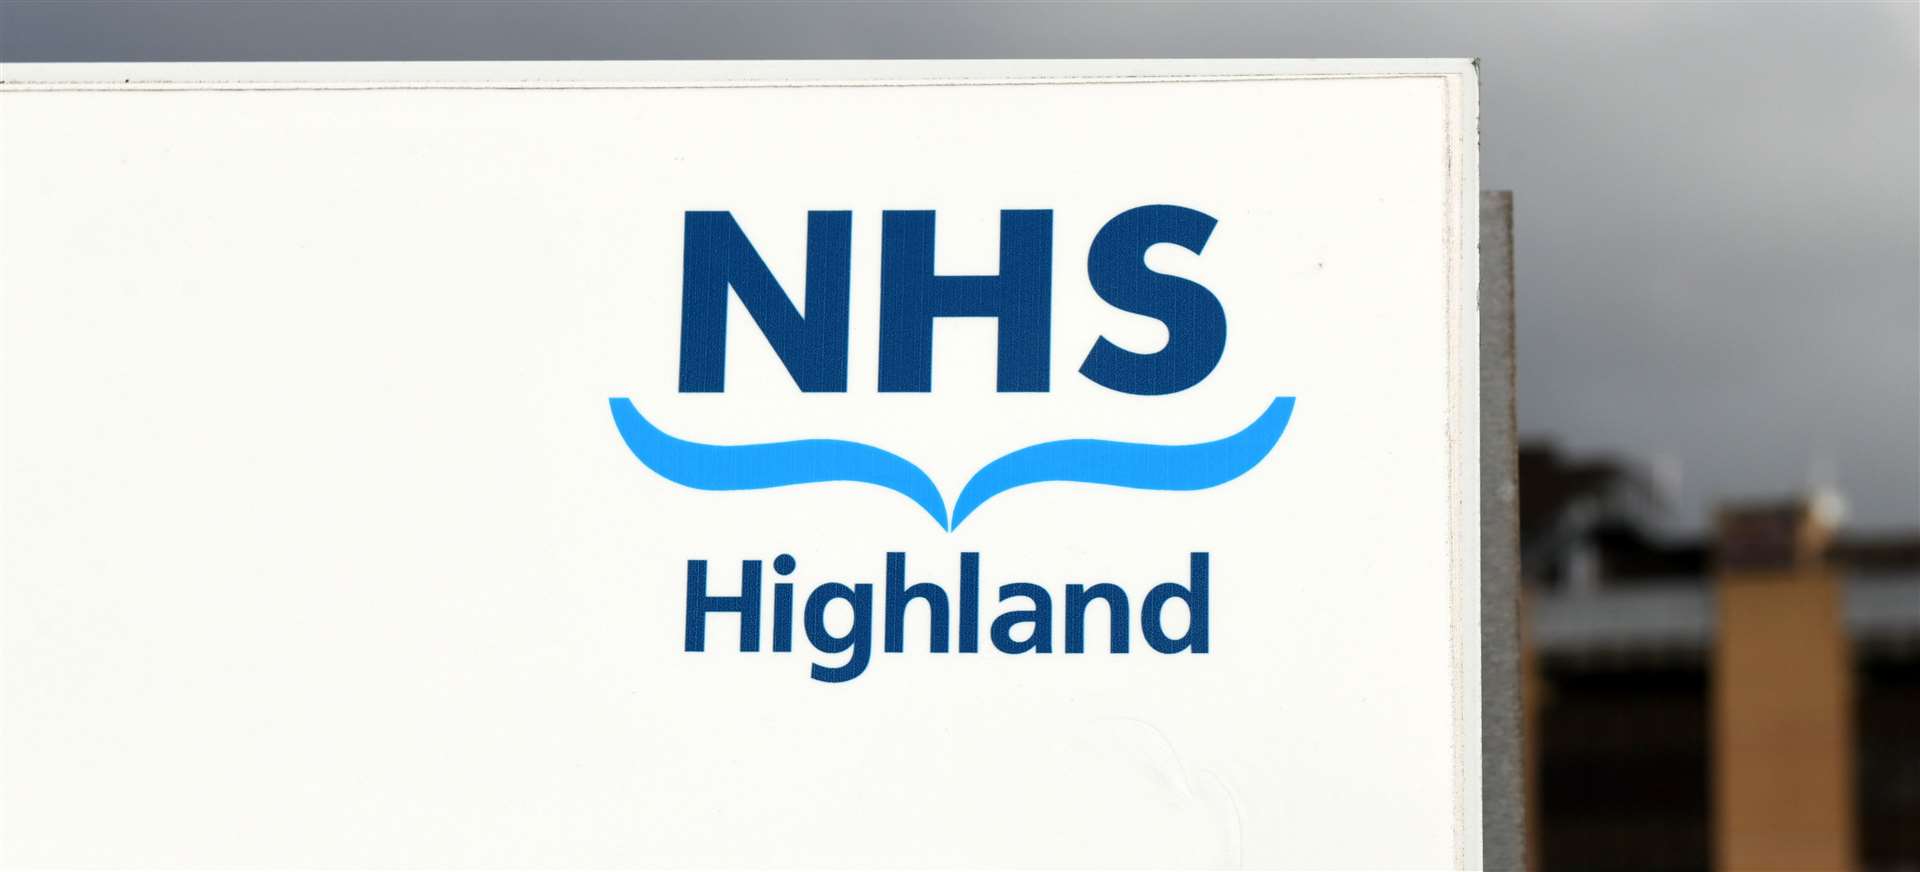 NHS Highland response.